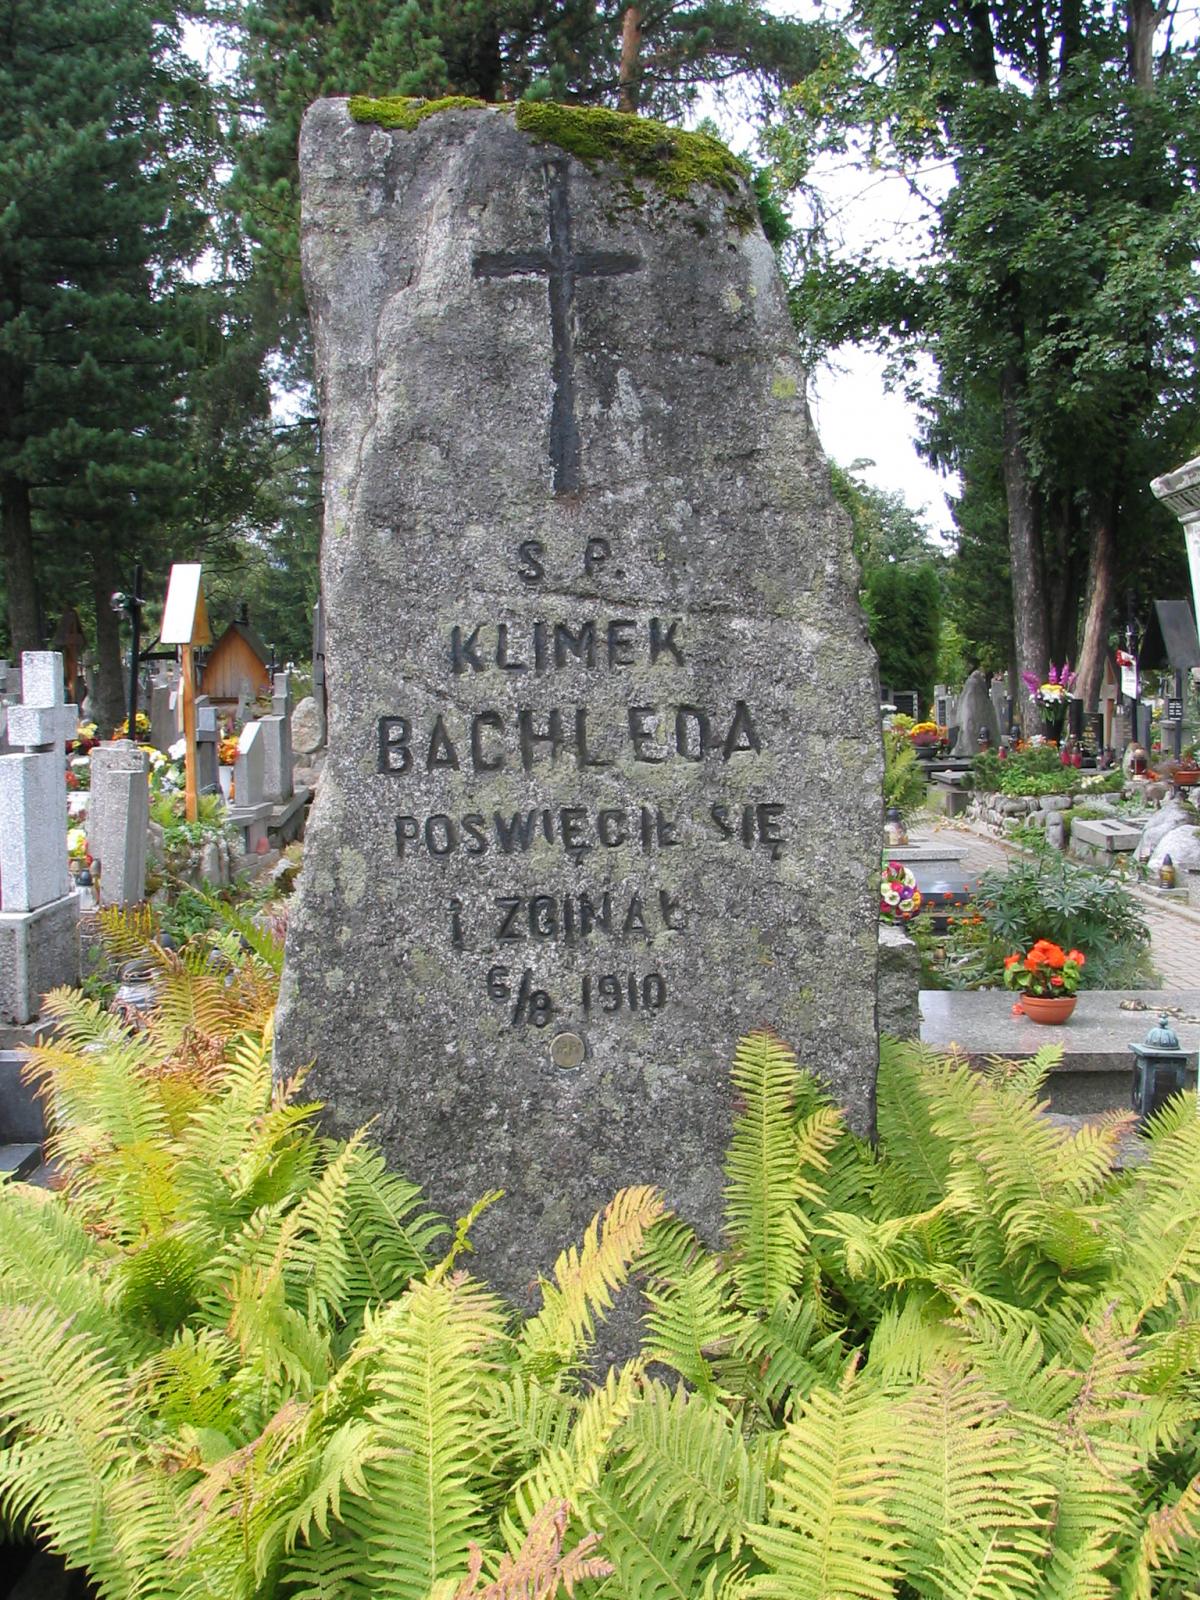 Wikipedia, Klimek Bachleda, New Cemetery in Zakopane, Self-published work